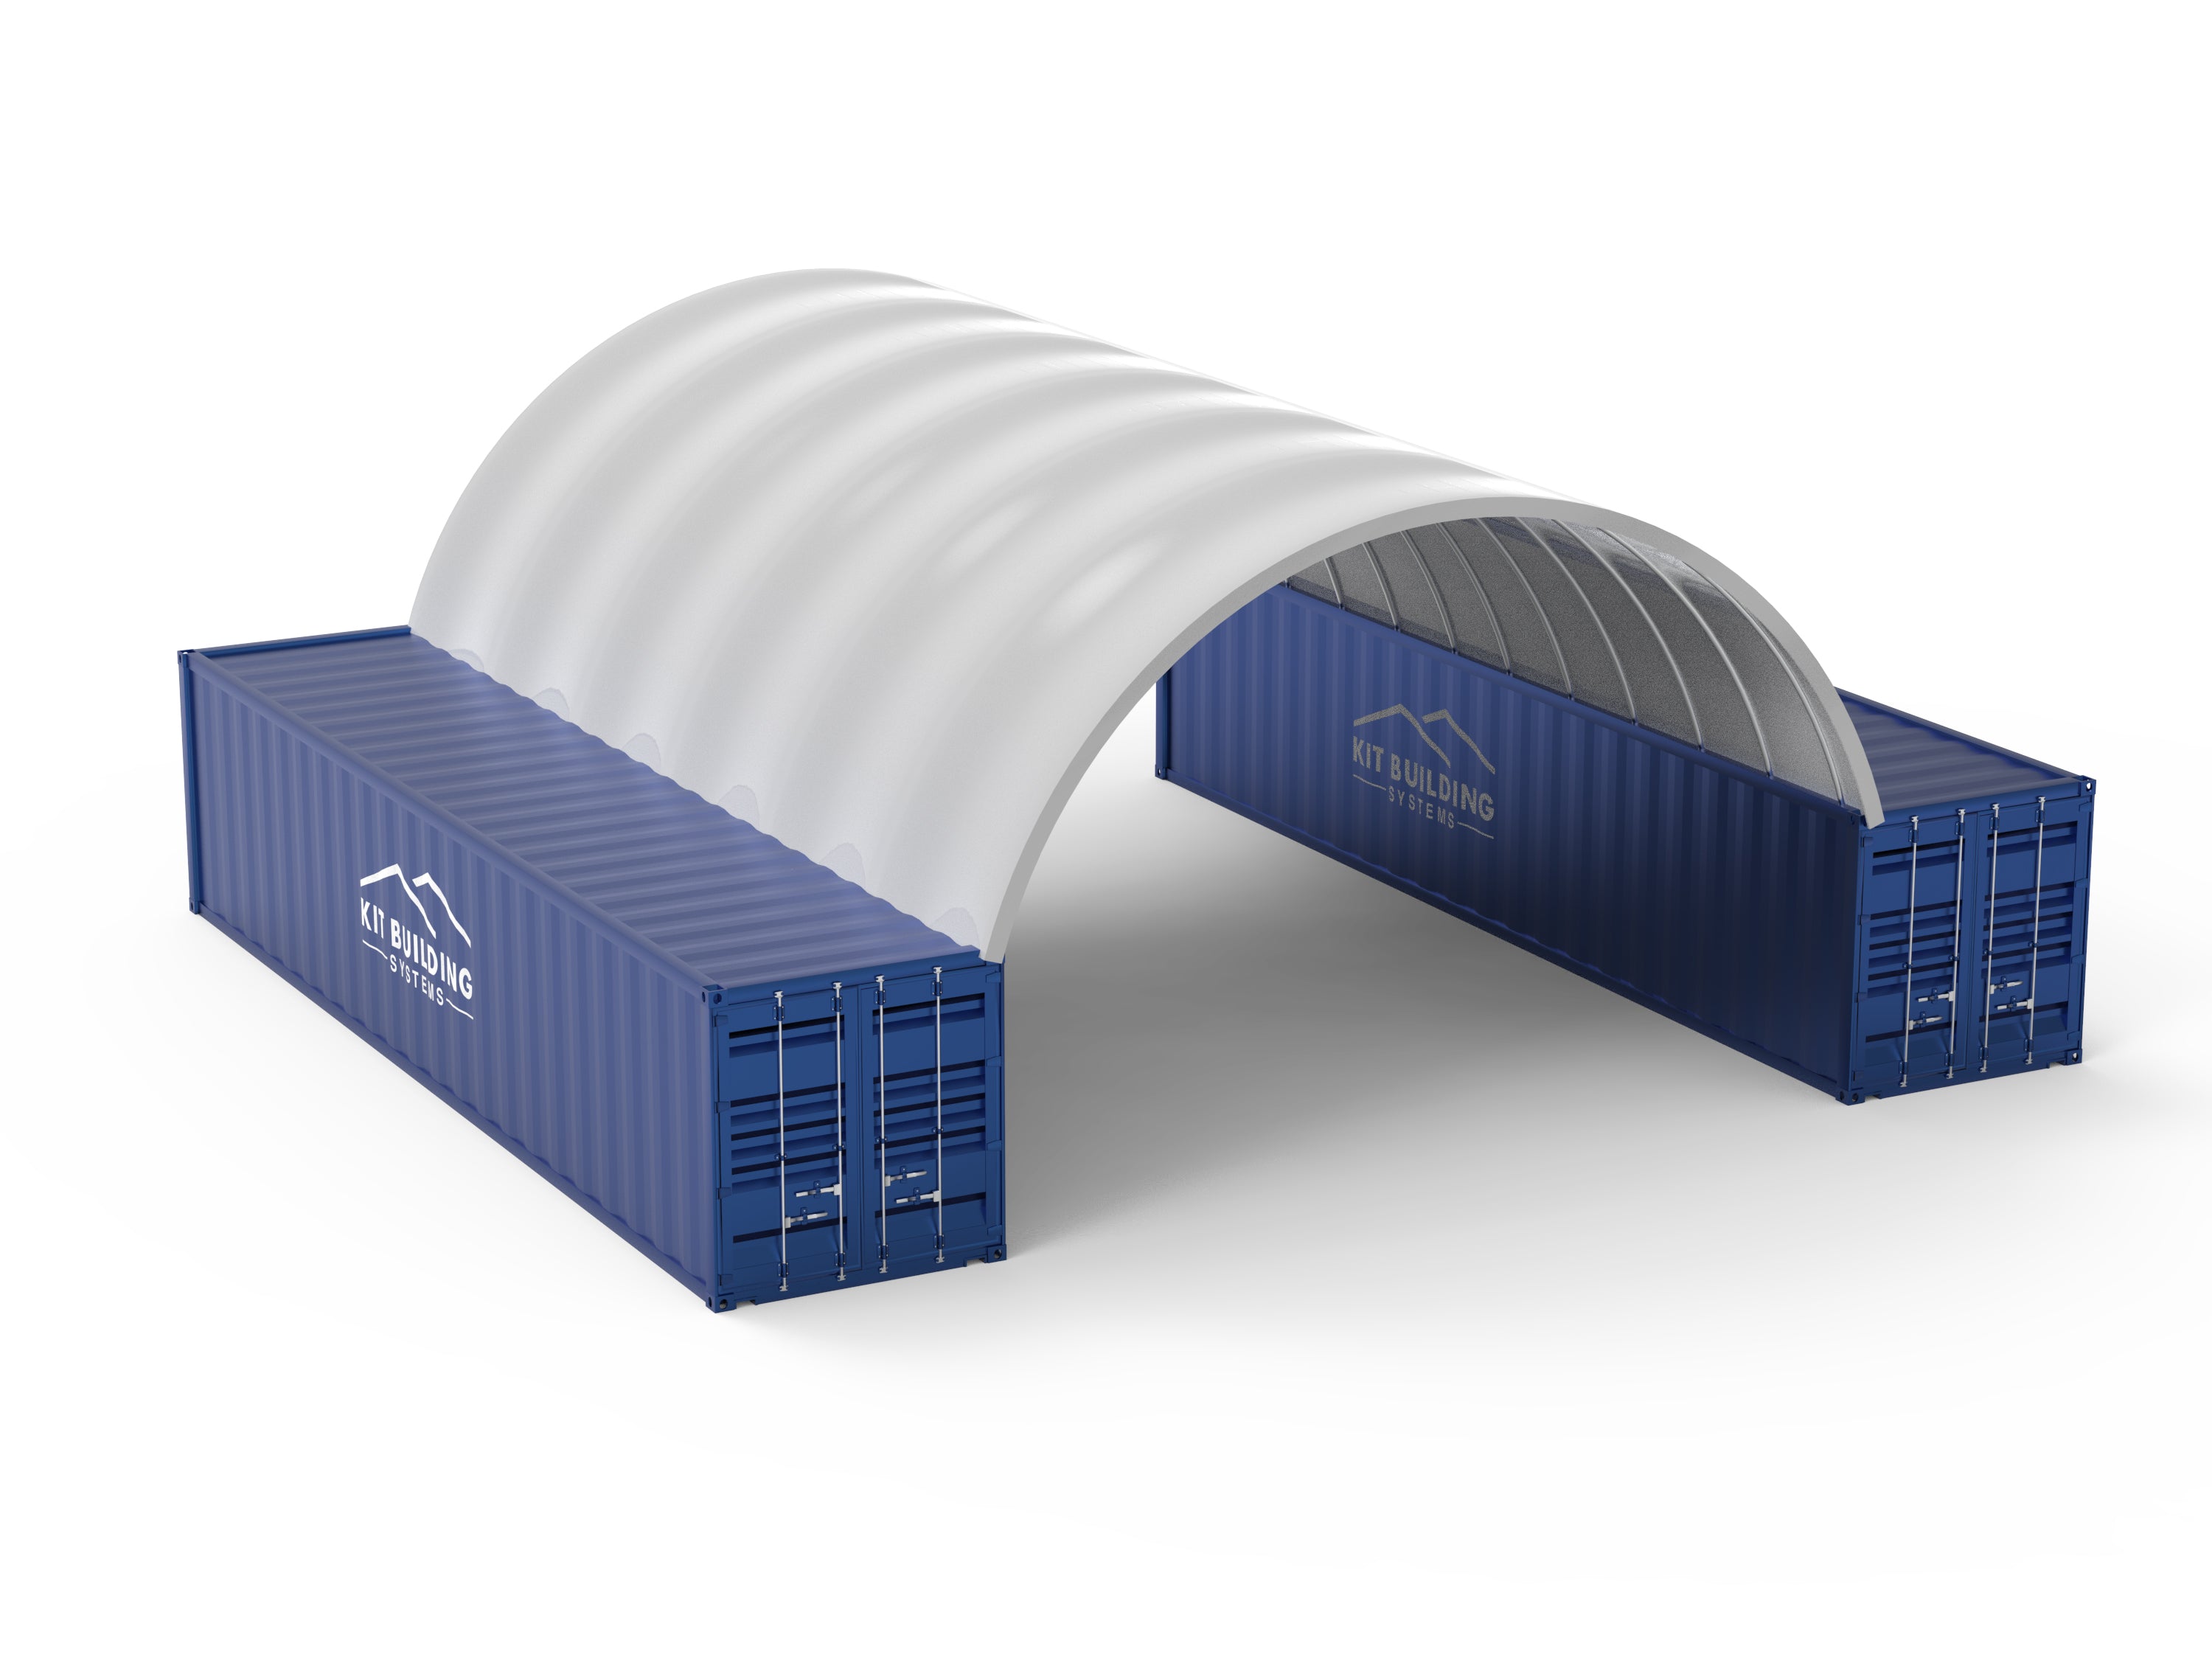 Containerunterstand – 26 Fuß x 40 Fuß x 10 Fuß (8 m x 12 m x 3 m)